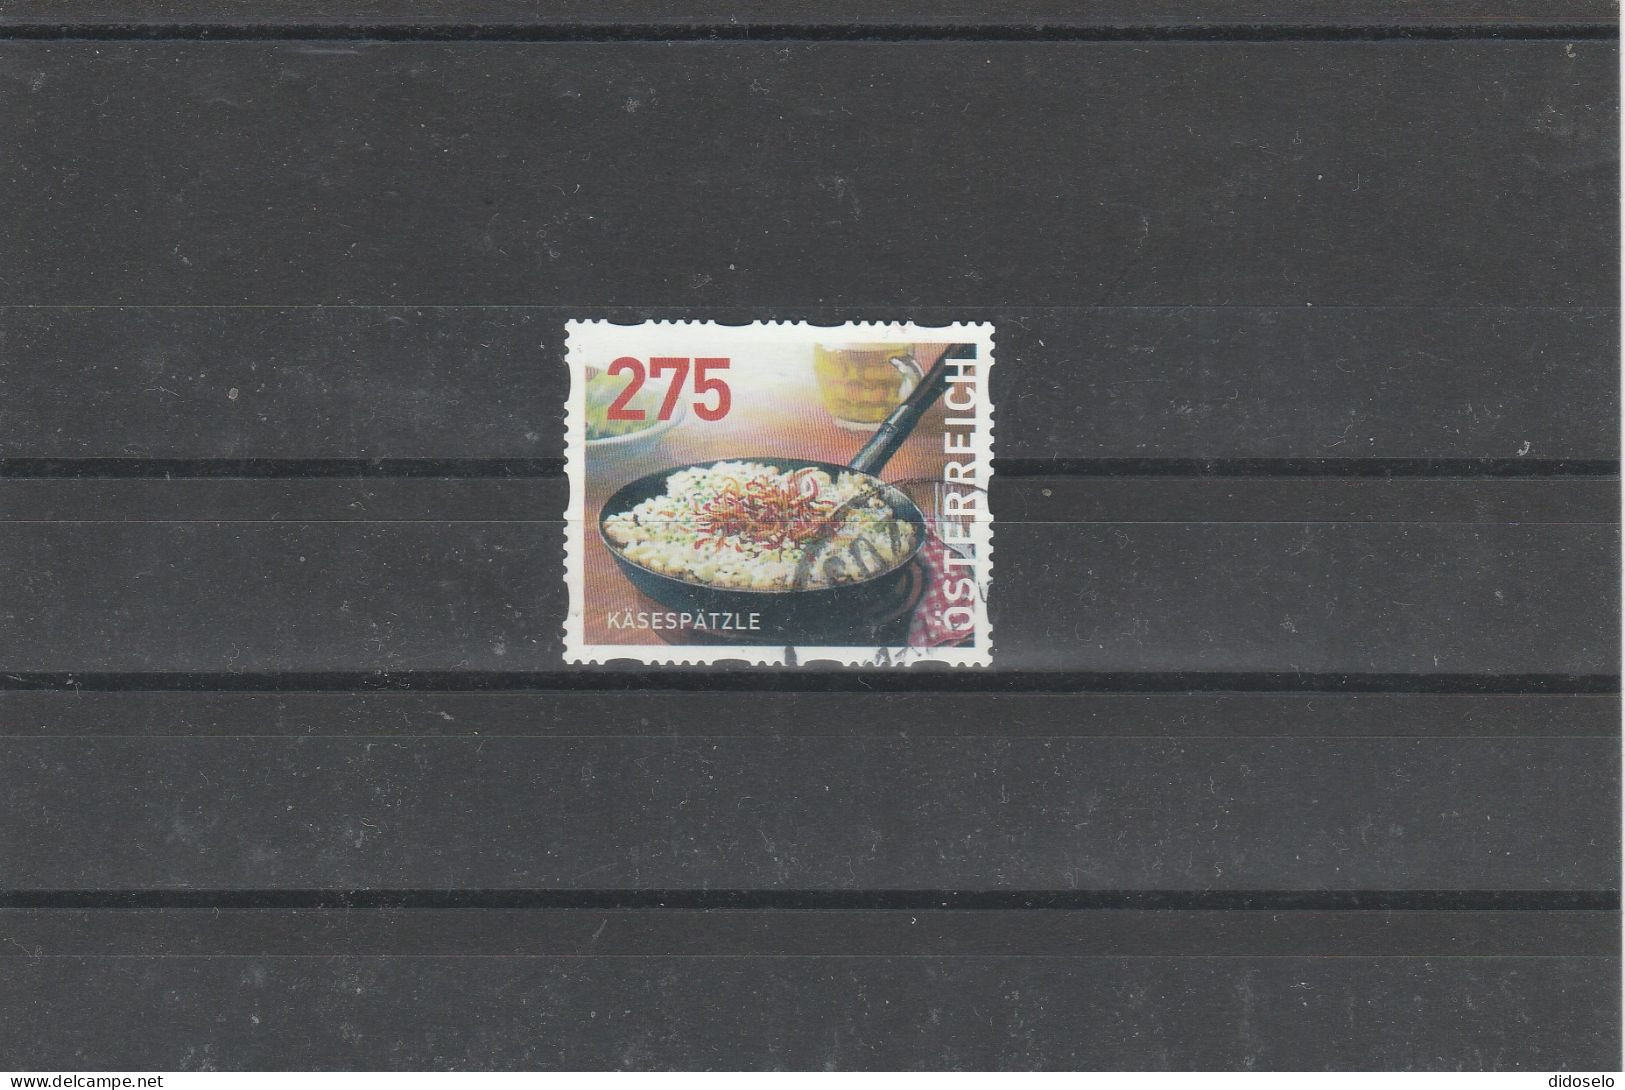 Austria - 2020 - Dispenser Stamp - Used - Mic.#32 - Gebruikt